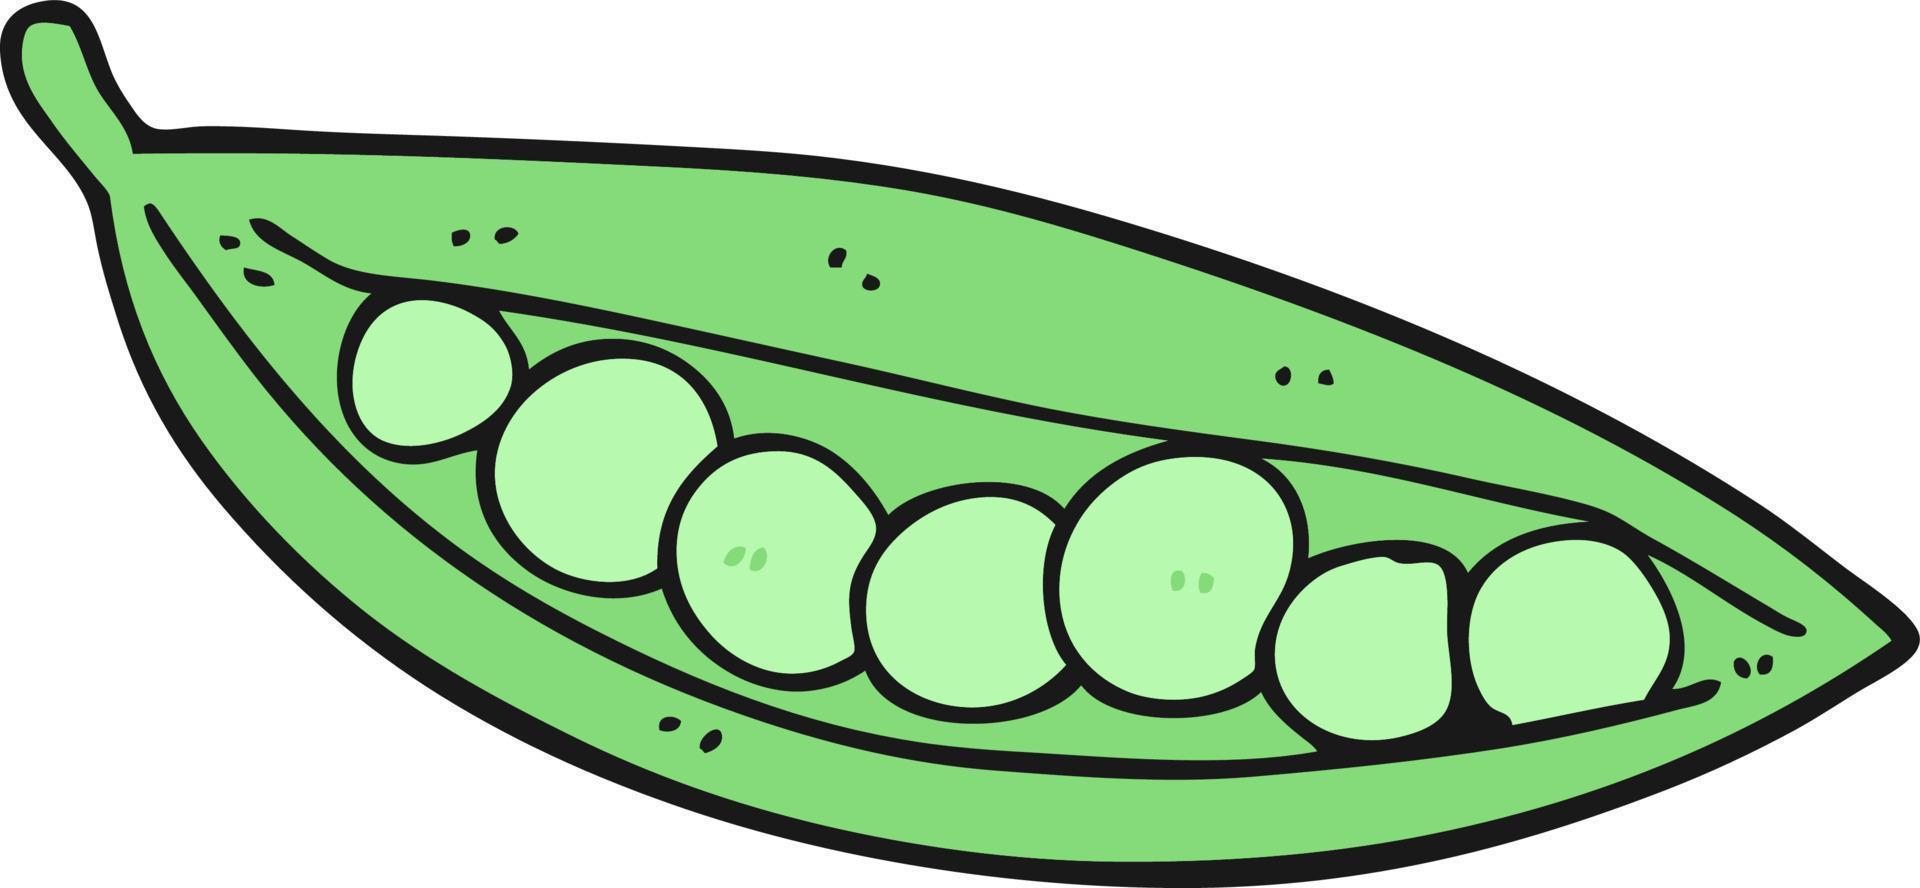 cartoon peas in pod vector